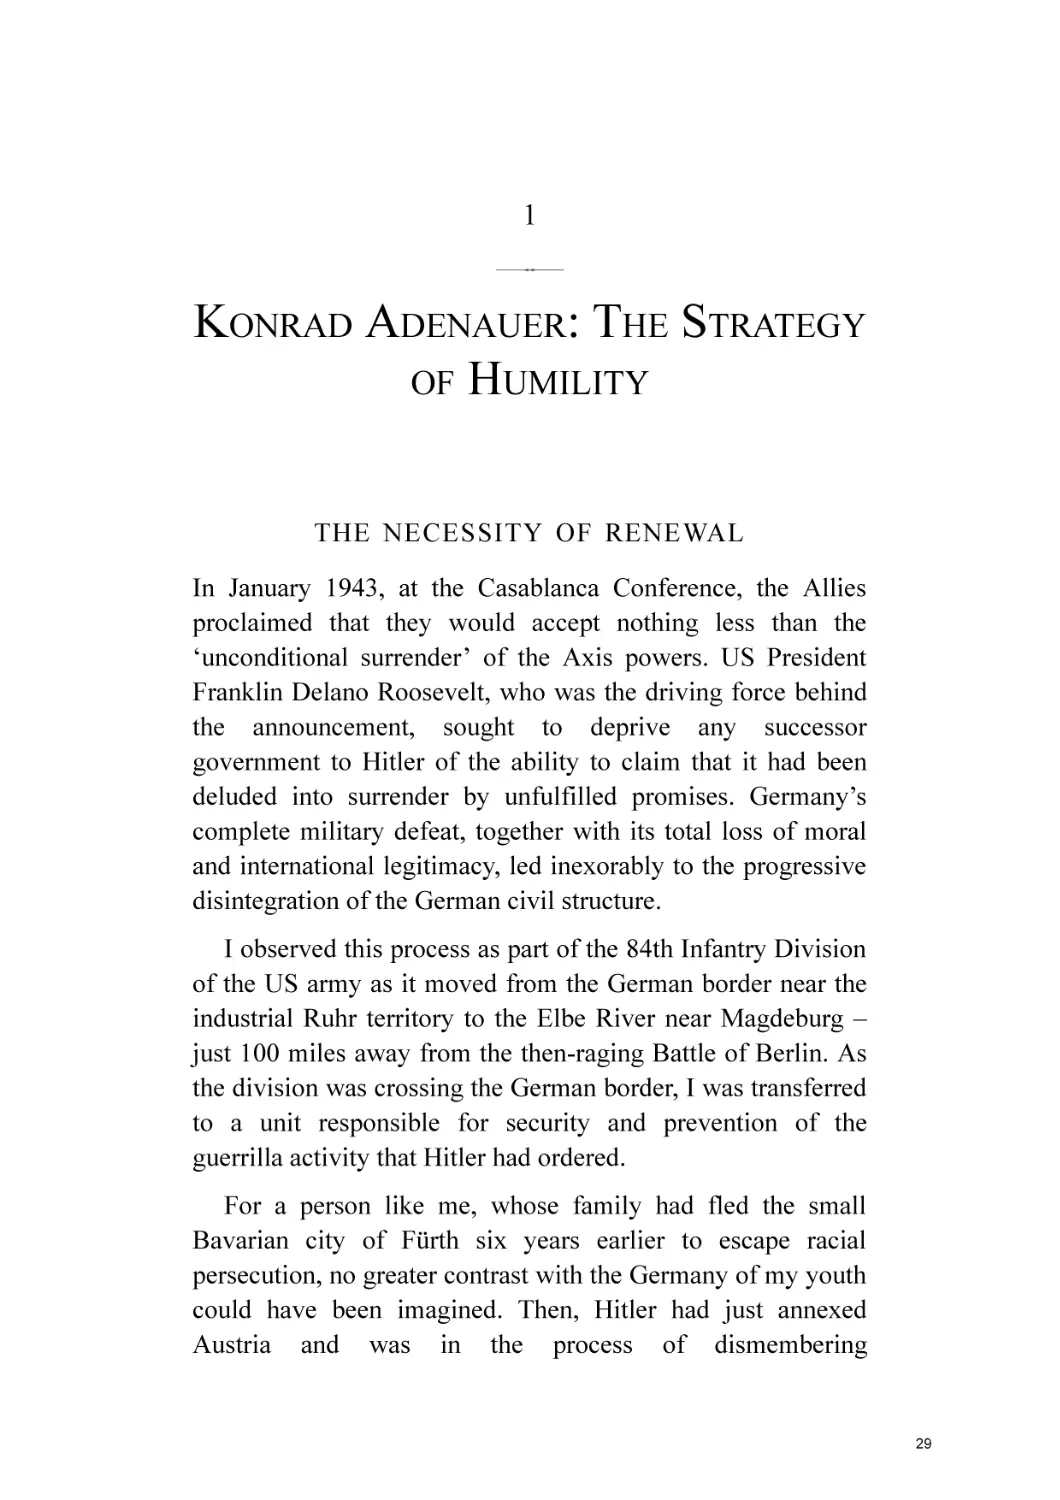 1. Konrad Adenauer
The Necessity of Renewal